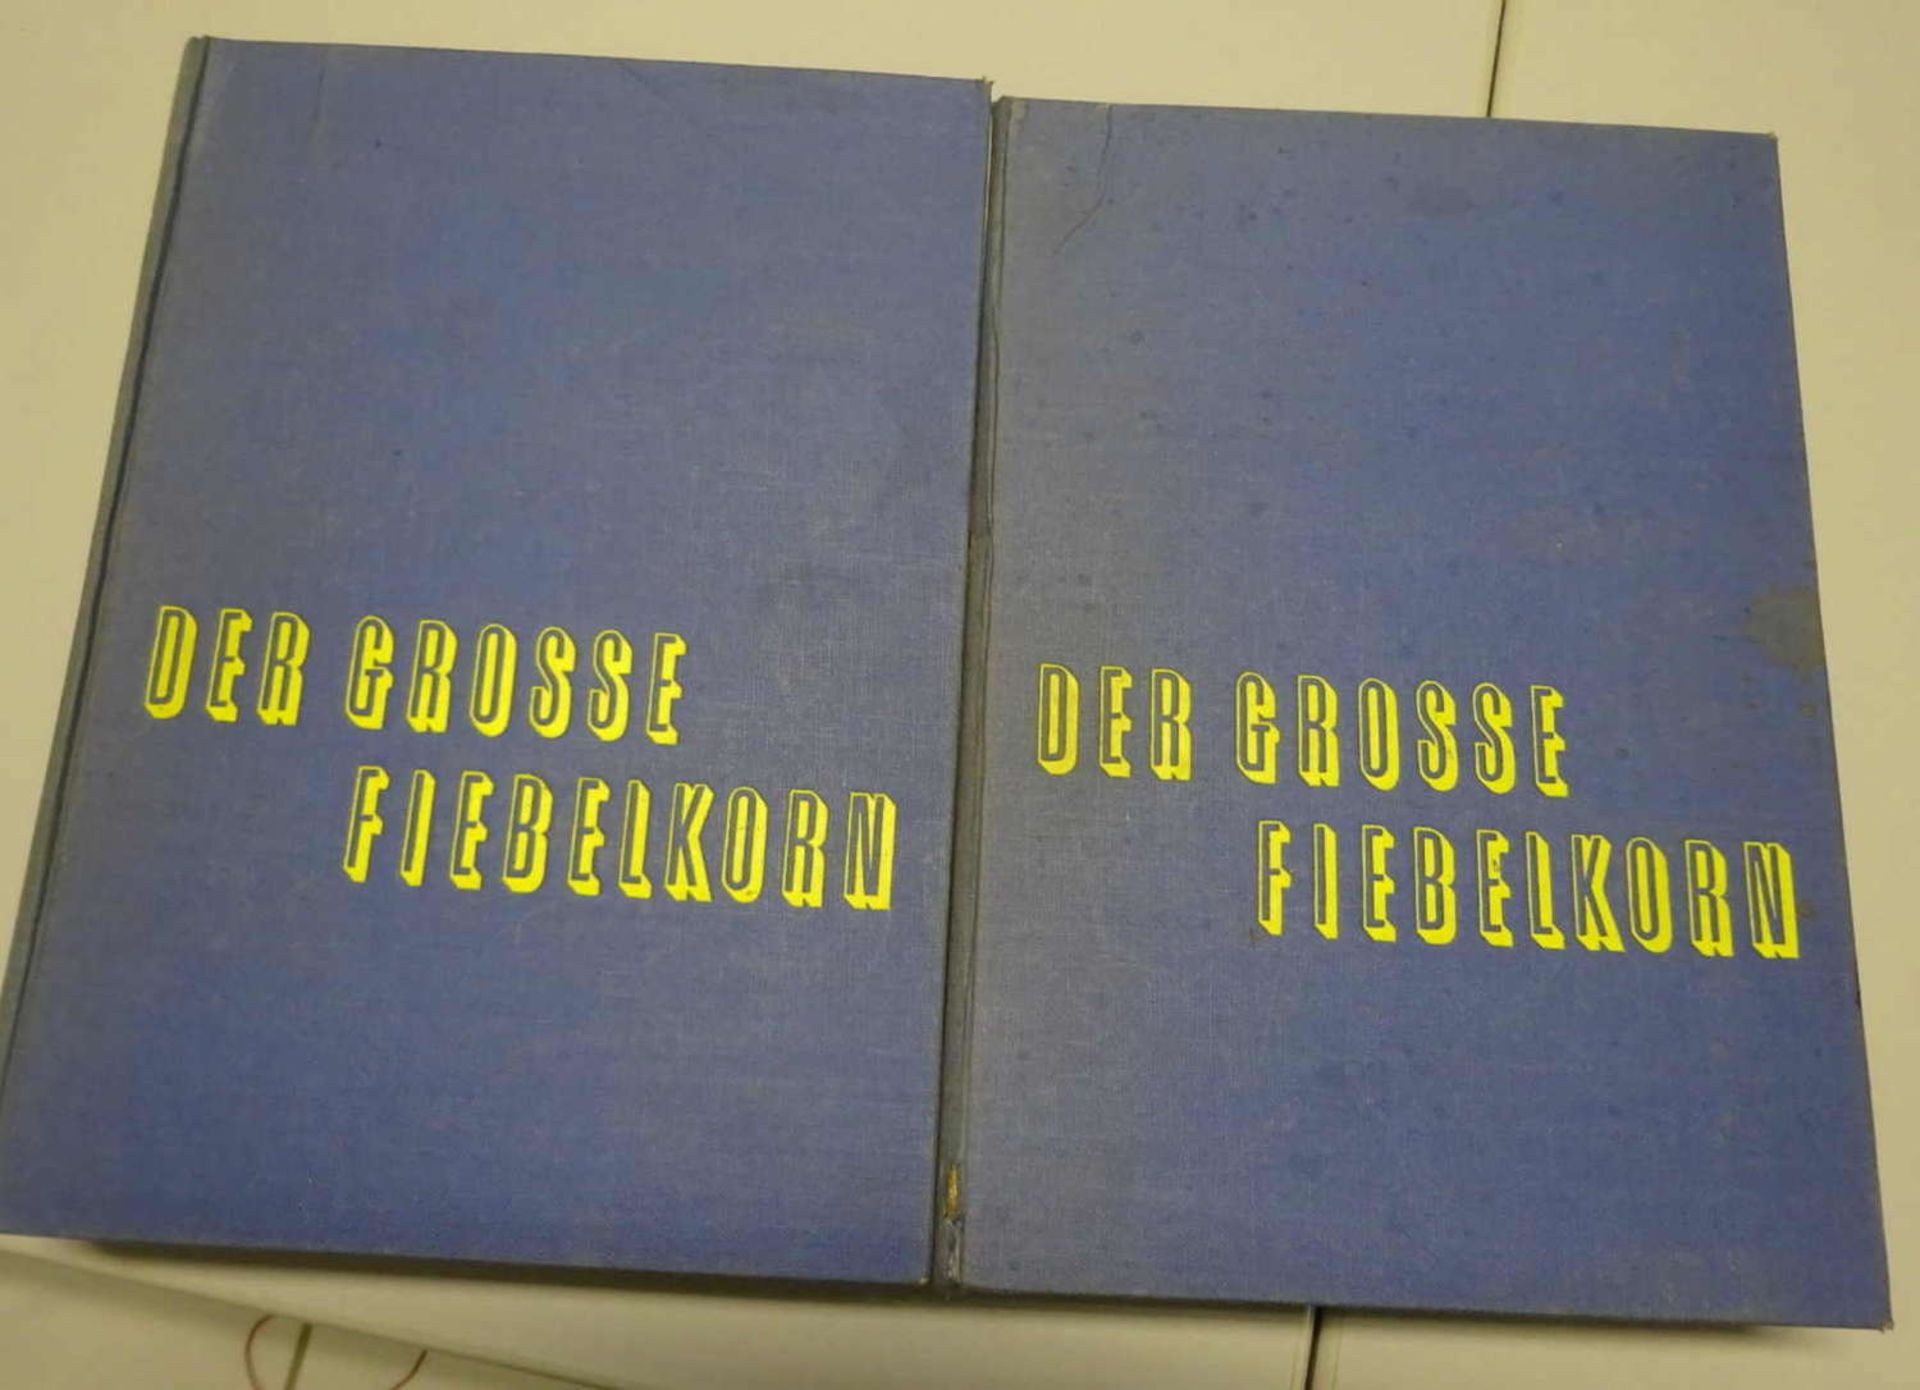 Der grosse Fieberkorn, Band 1 + 2, Klasing & co.The big Fieberkorn, Volume 1 + 2, Klasing & co.